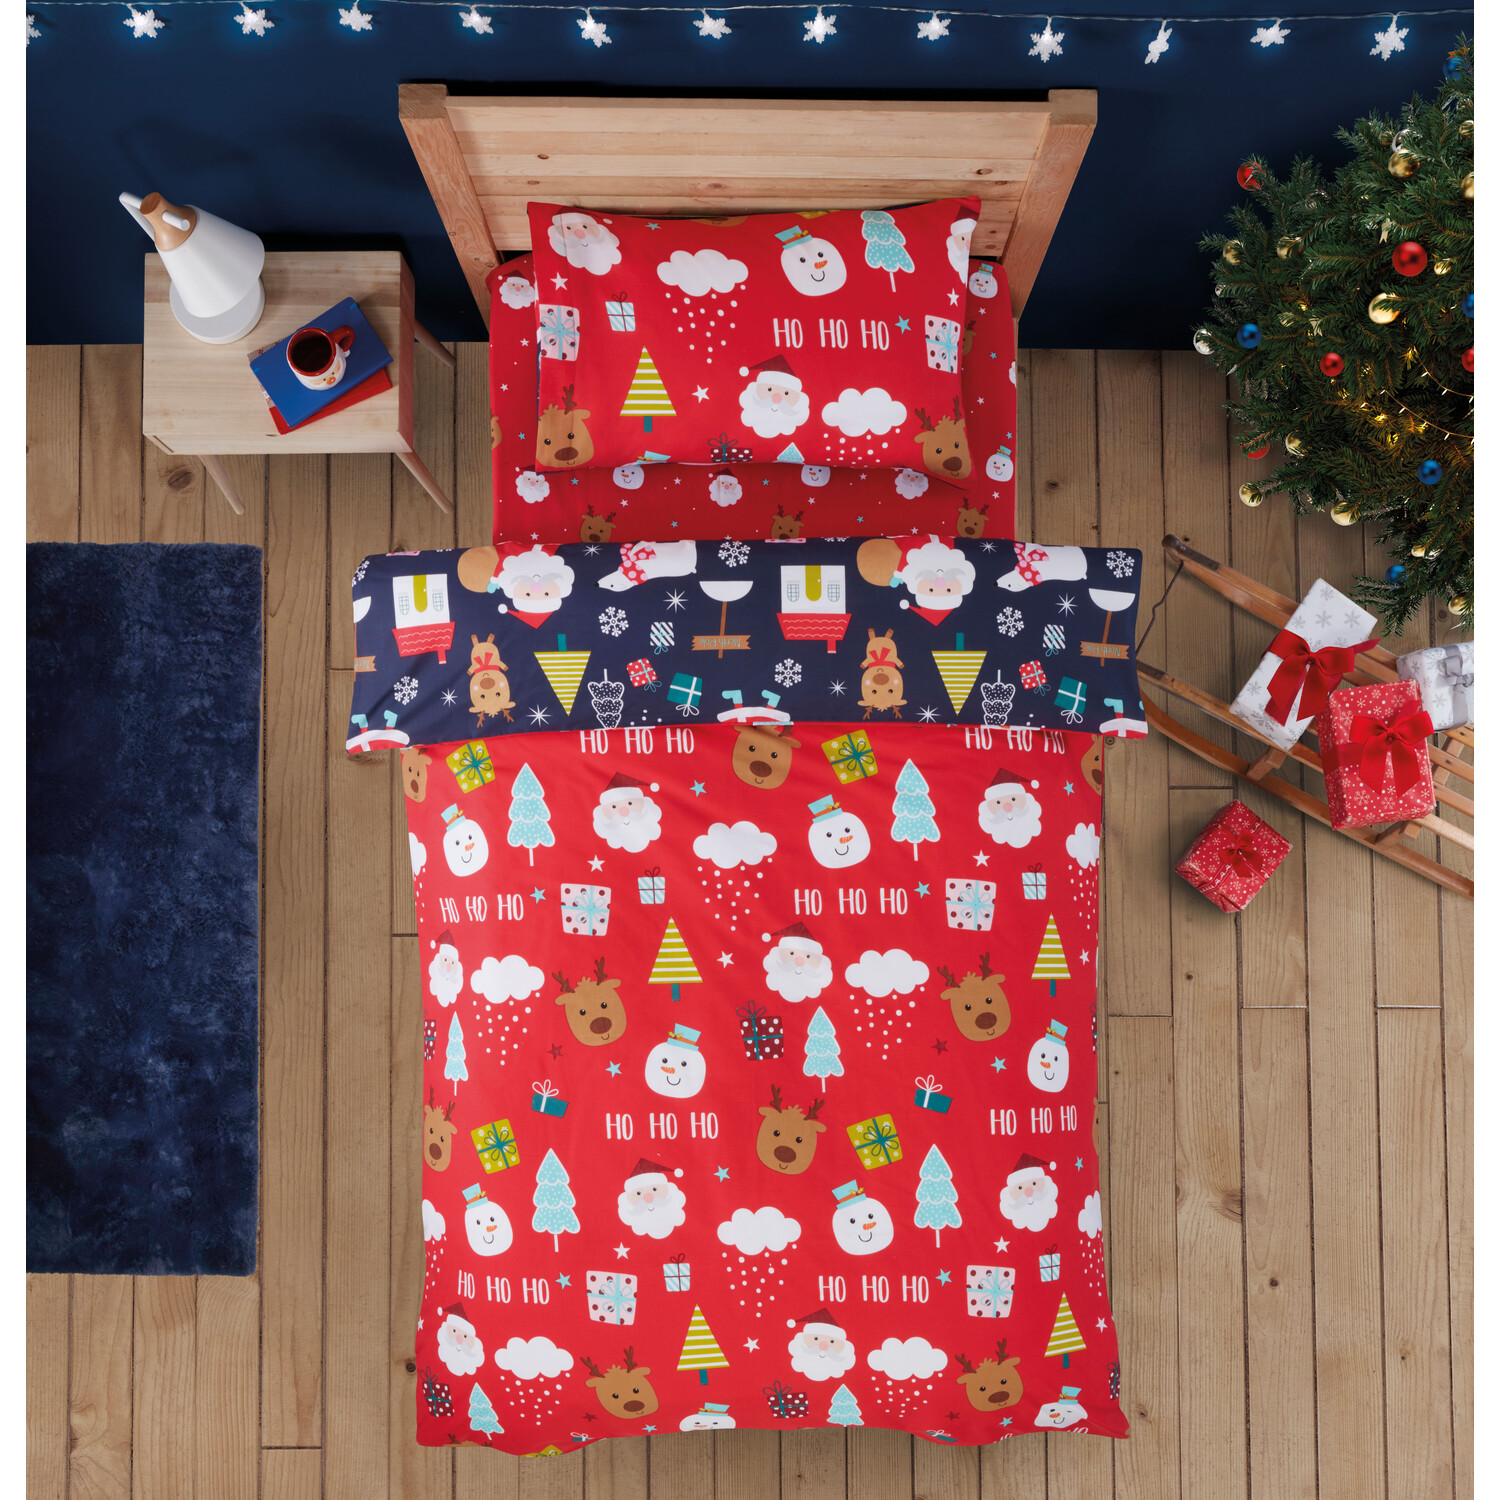 Santa and Friends Duvet Cover and Pillowcase Set - Navy Image 2